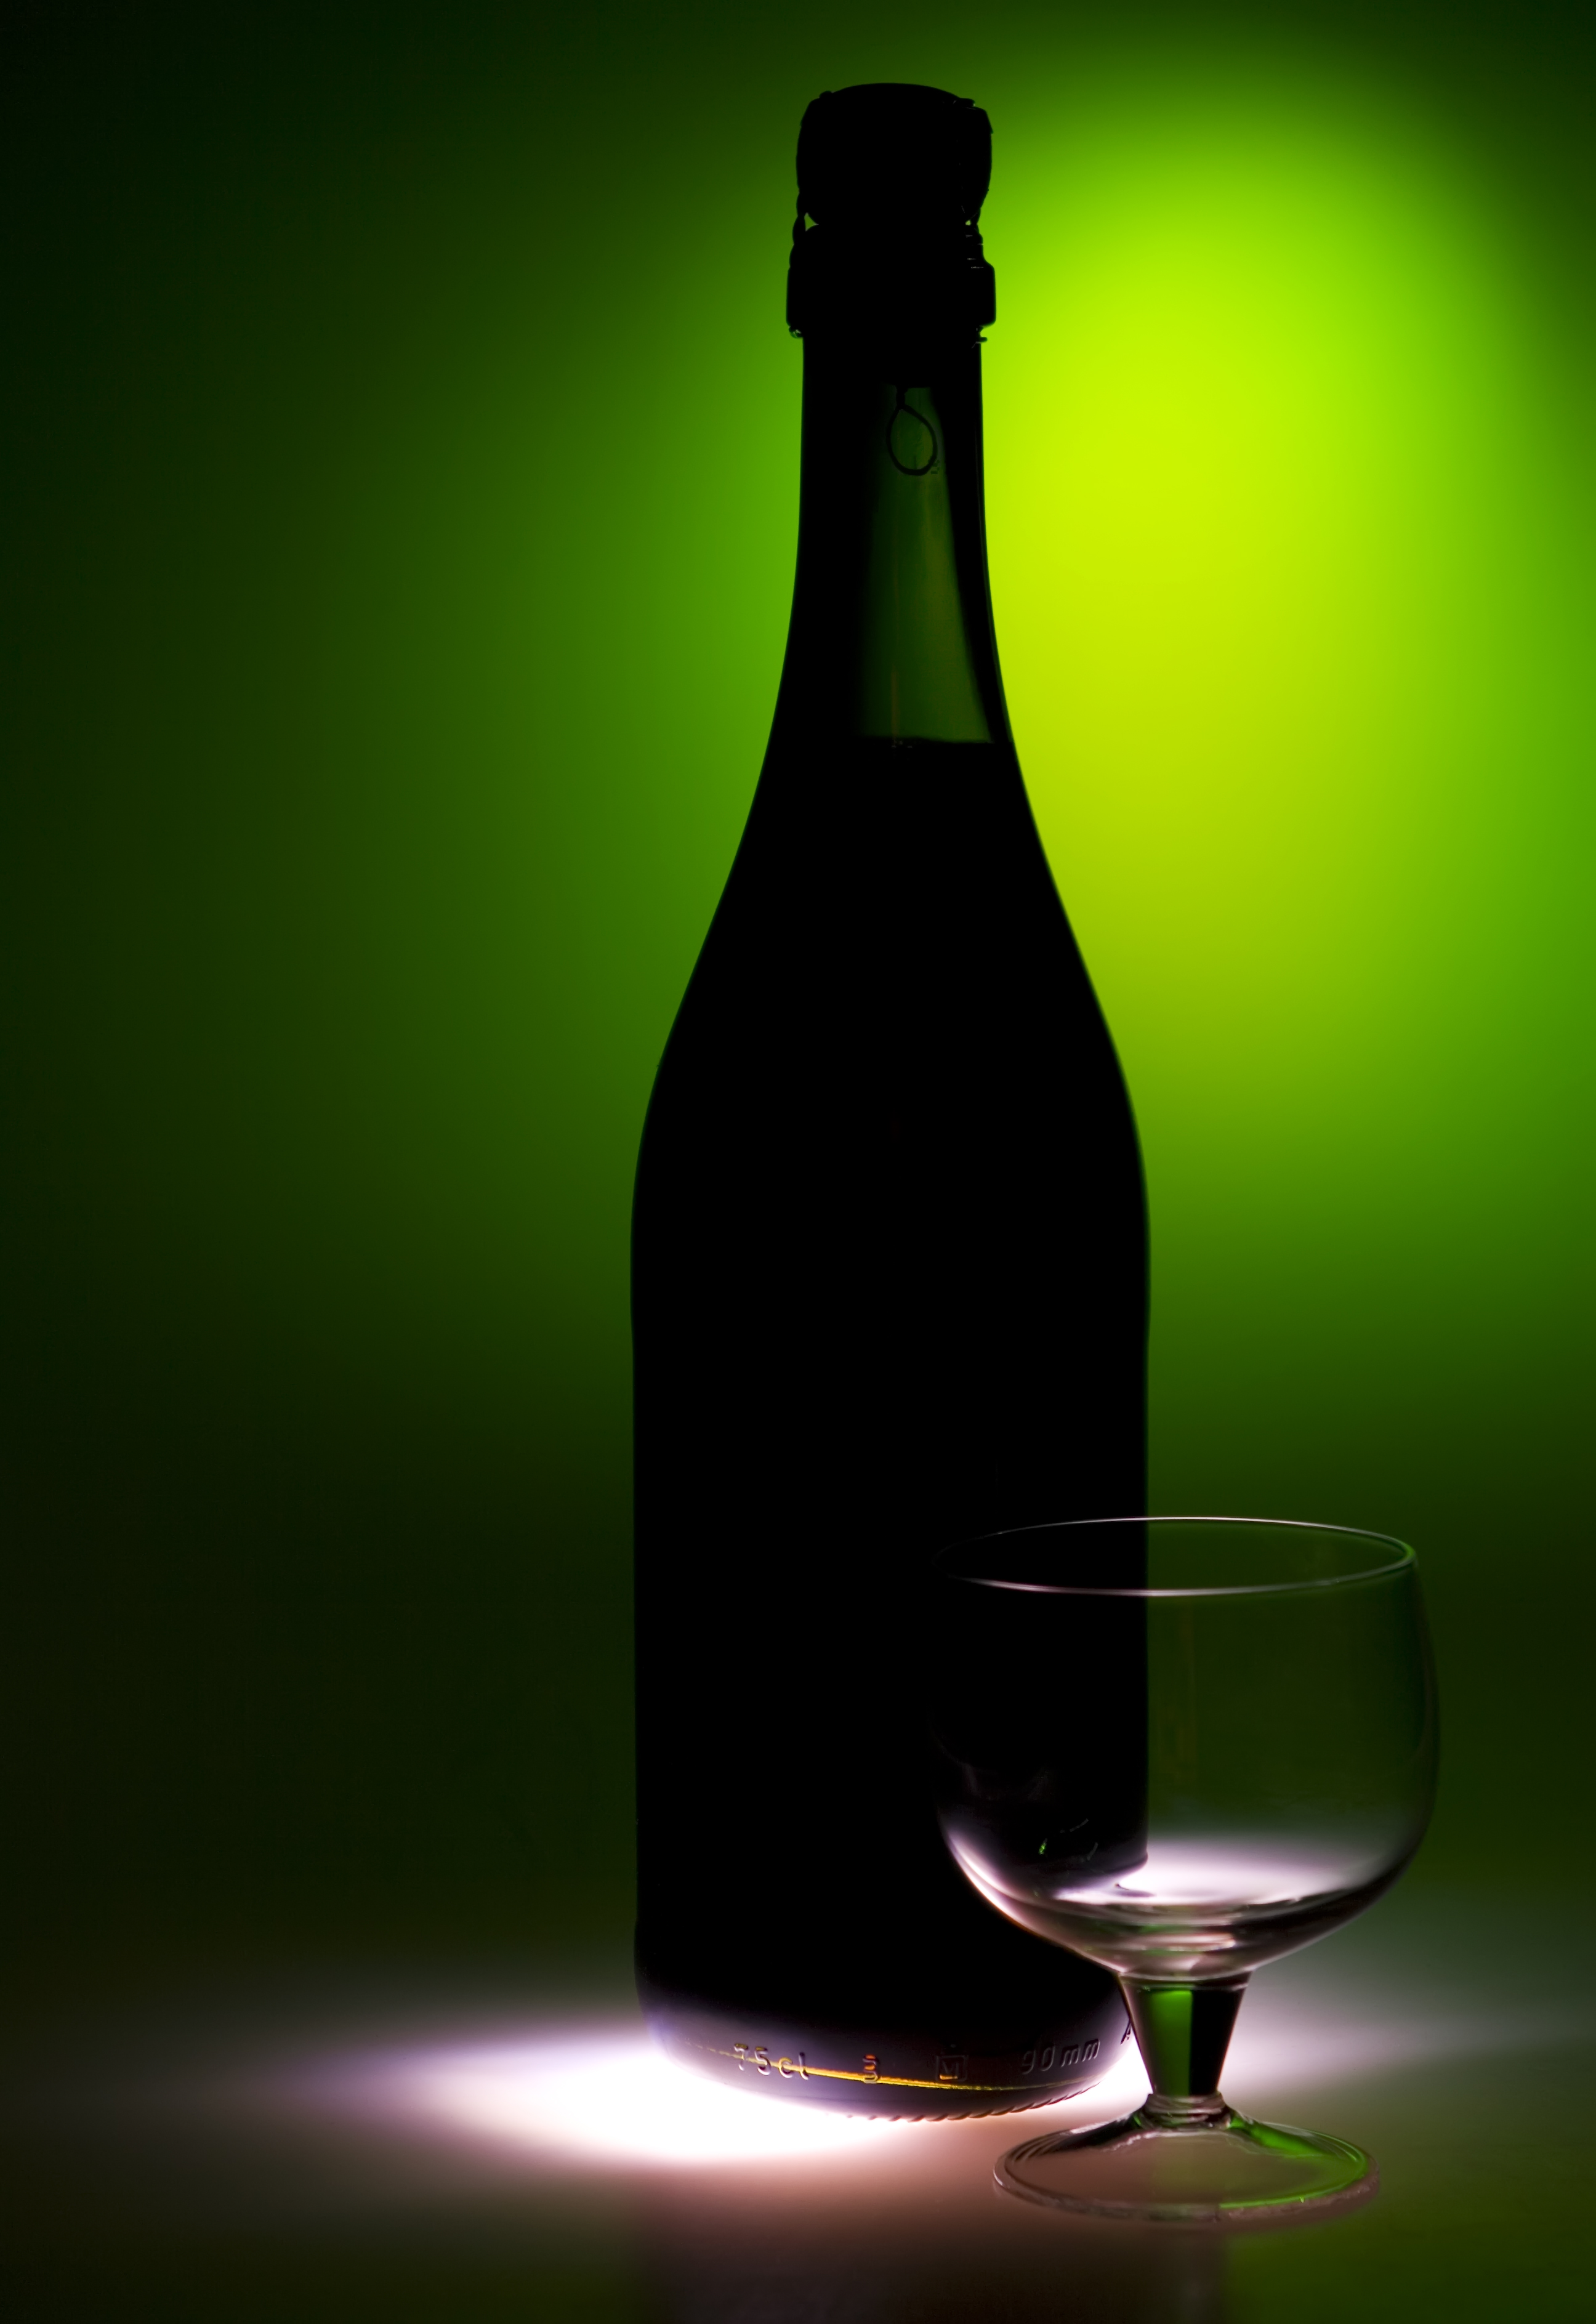 Wine and Glass, Alcohol, Lifestyle, Still-life, Seasonal, HQ Photo